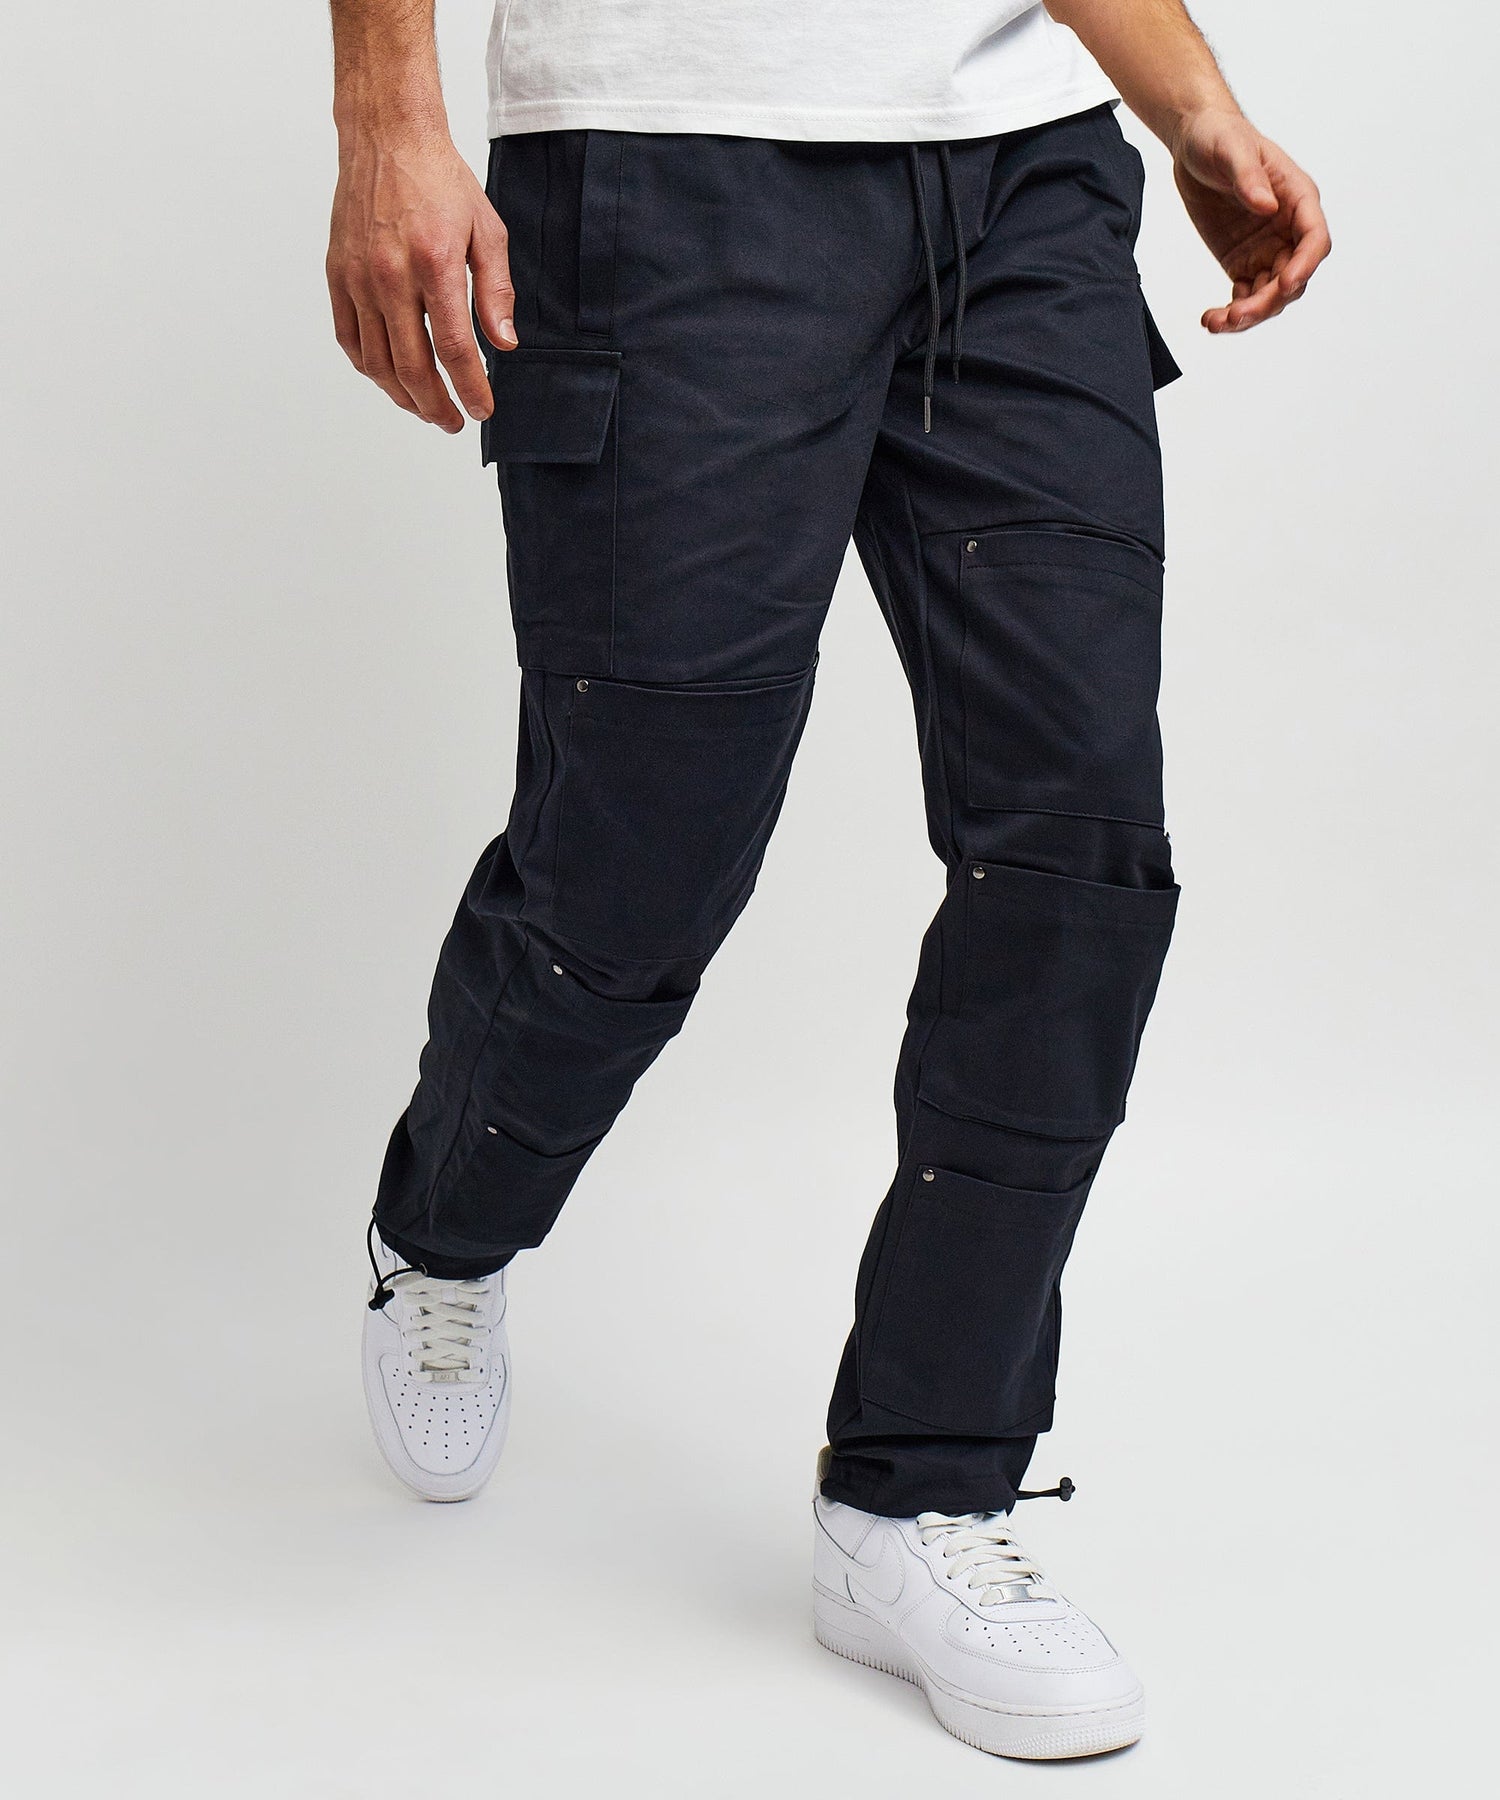 Workwear Black Slim Fit Cargo Pants, PacSun